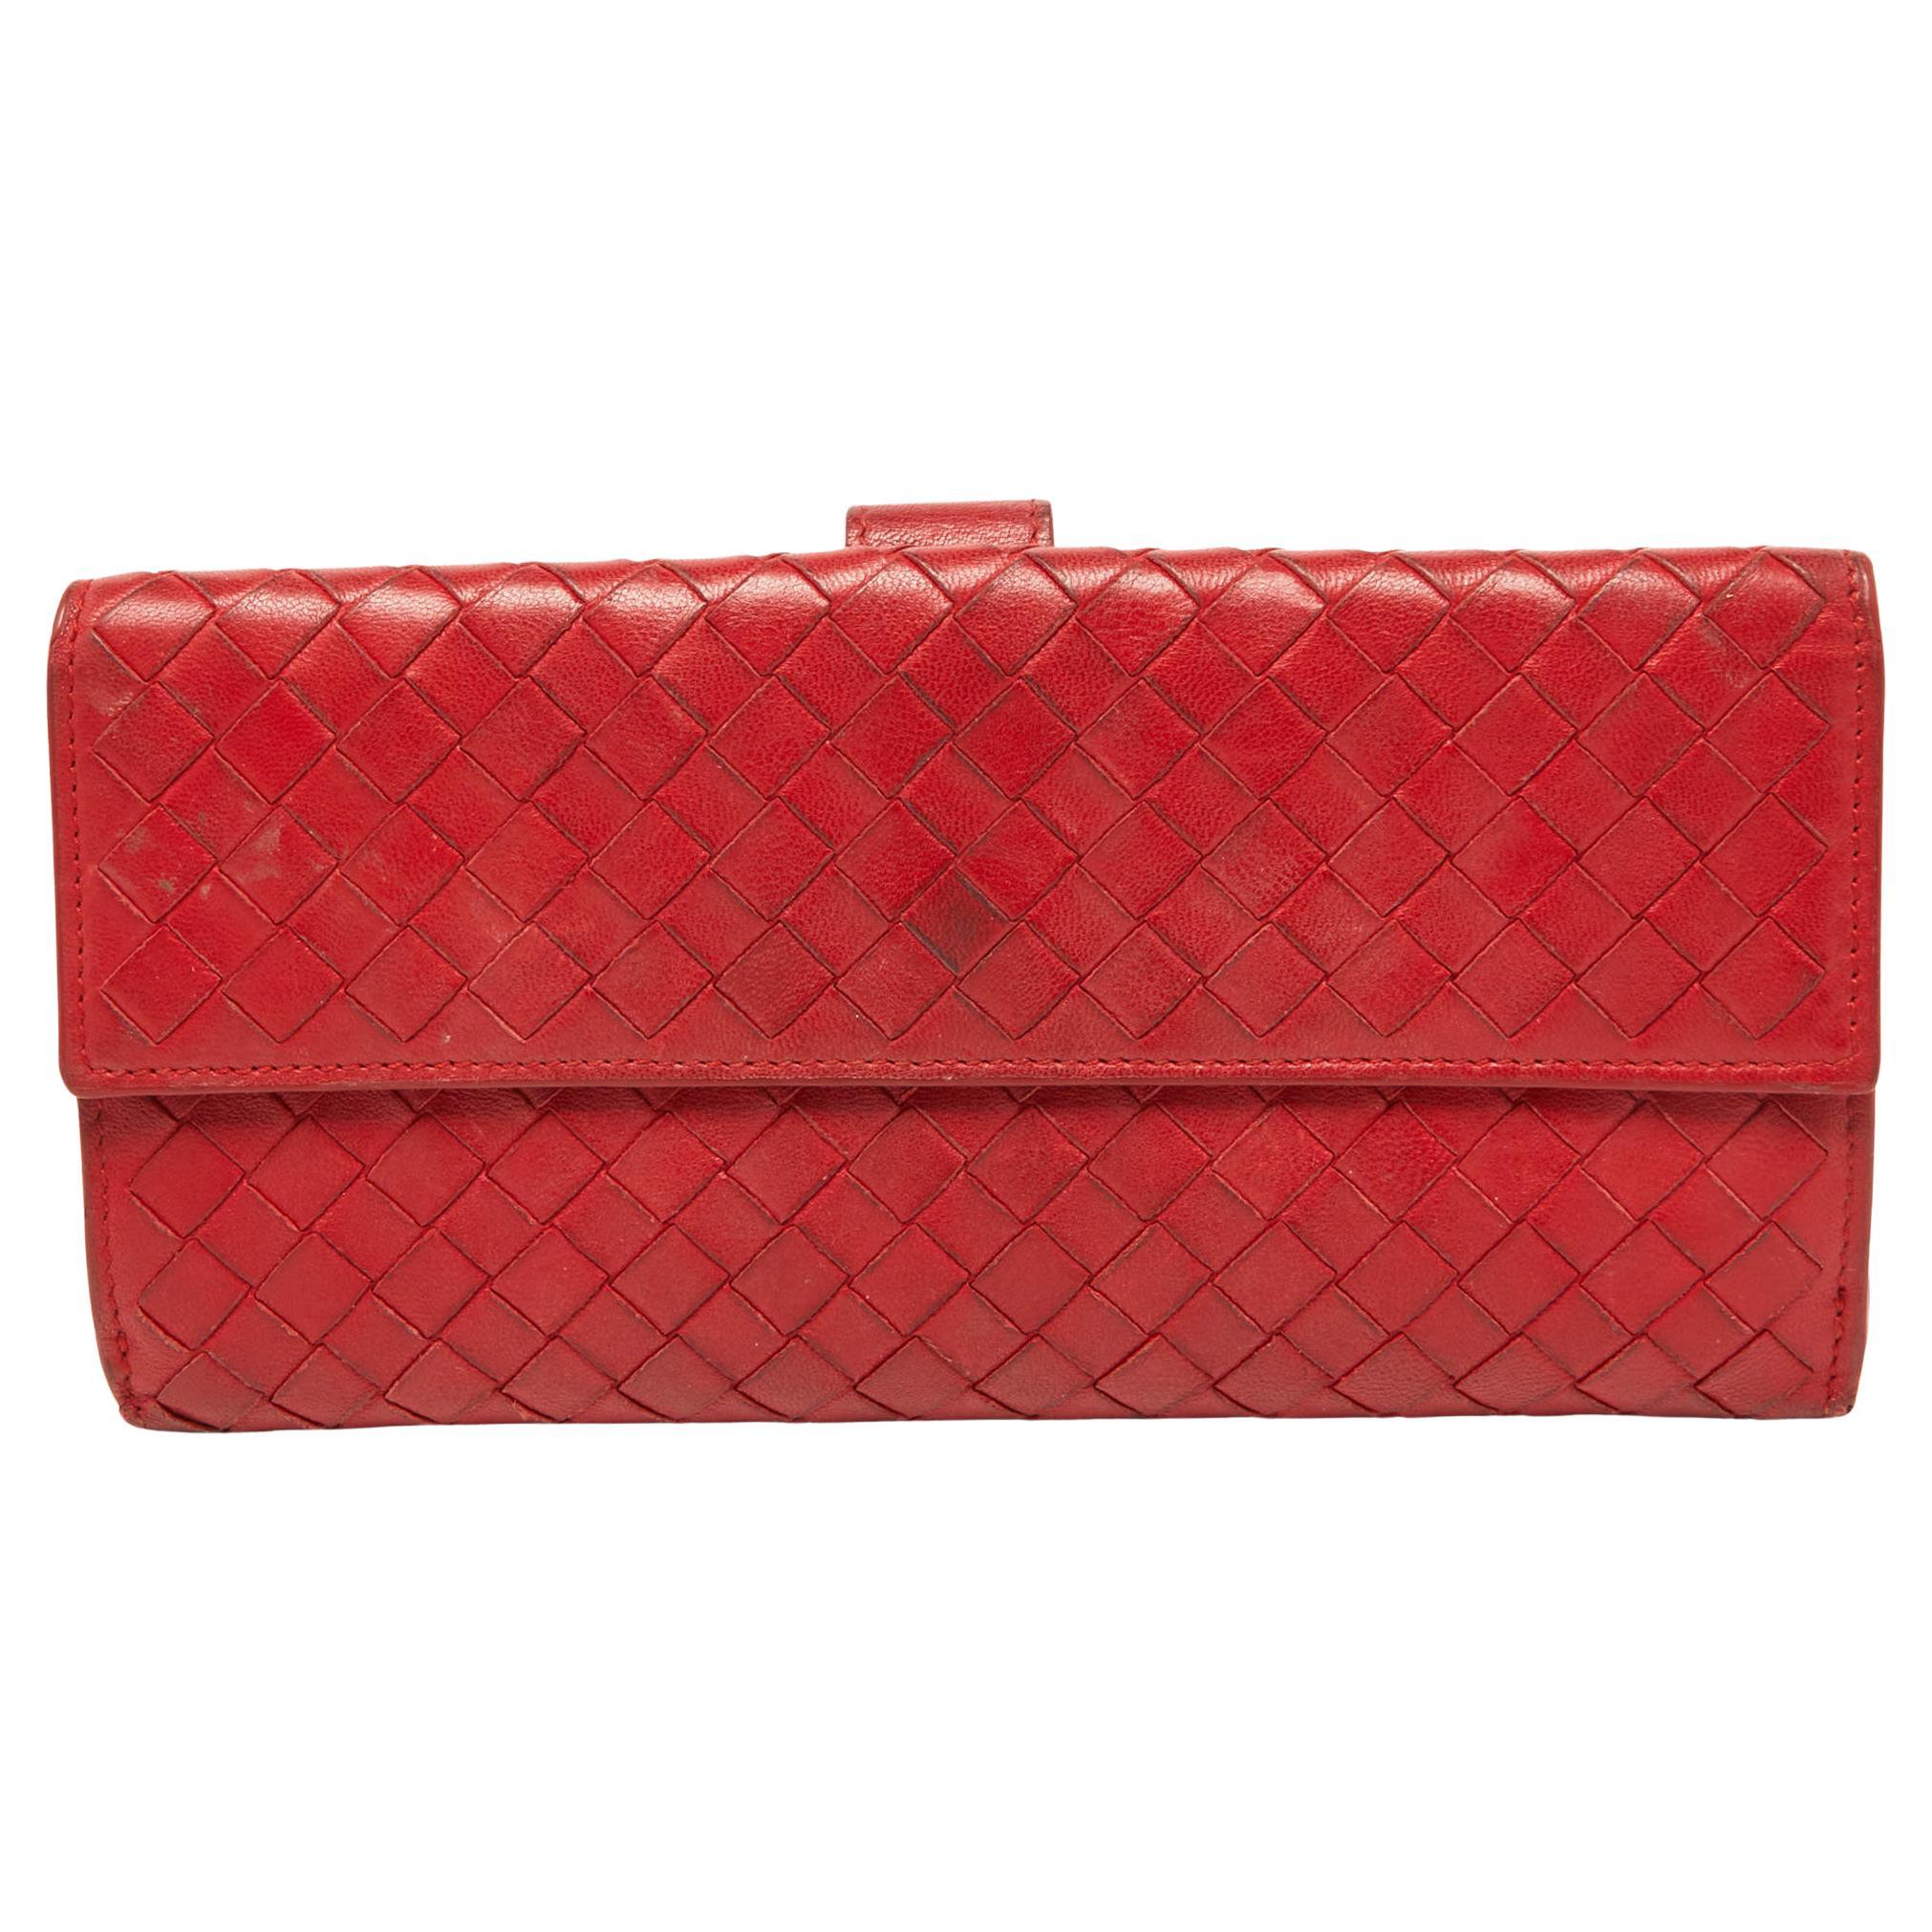 Bottega Veneta Red Intrecciato Leather Flap Continental Wallet For Sale